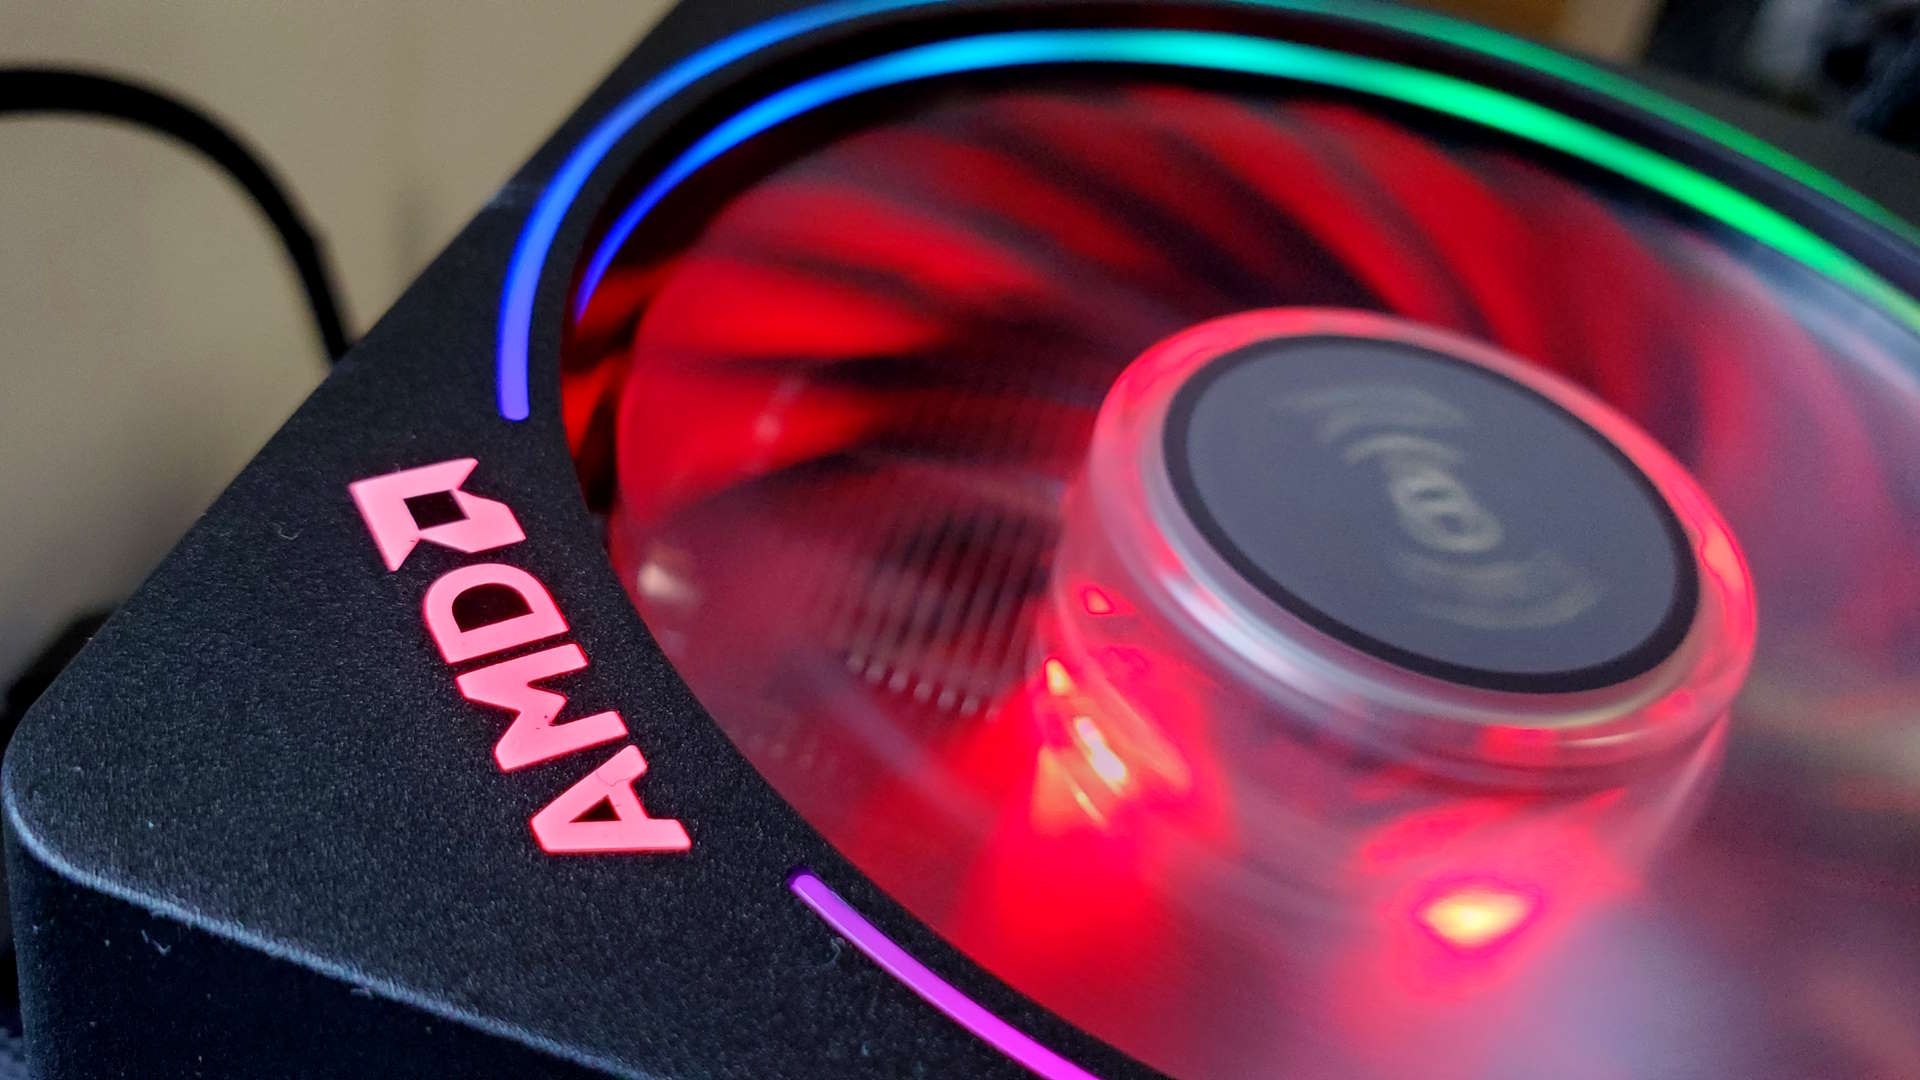 AMD Wraith CPU cooler